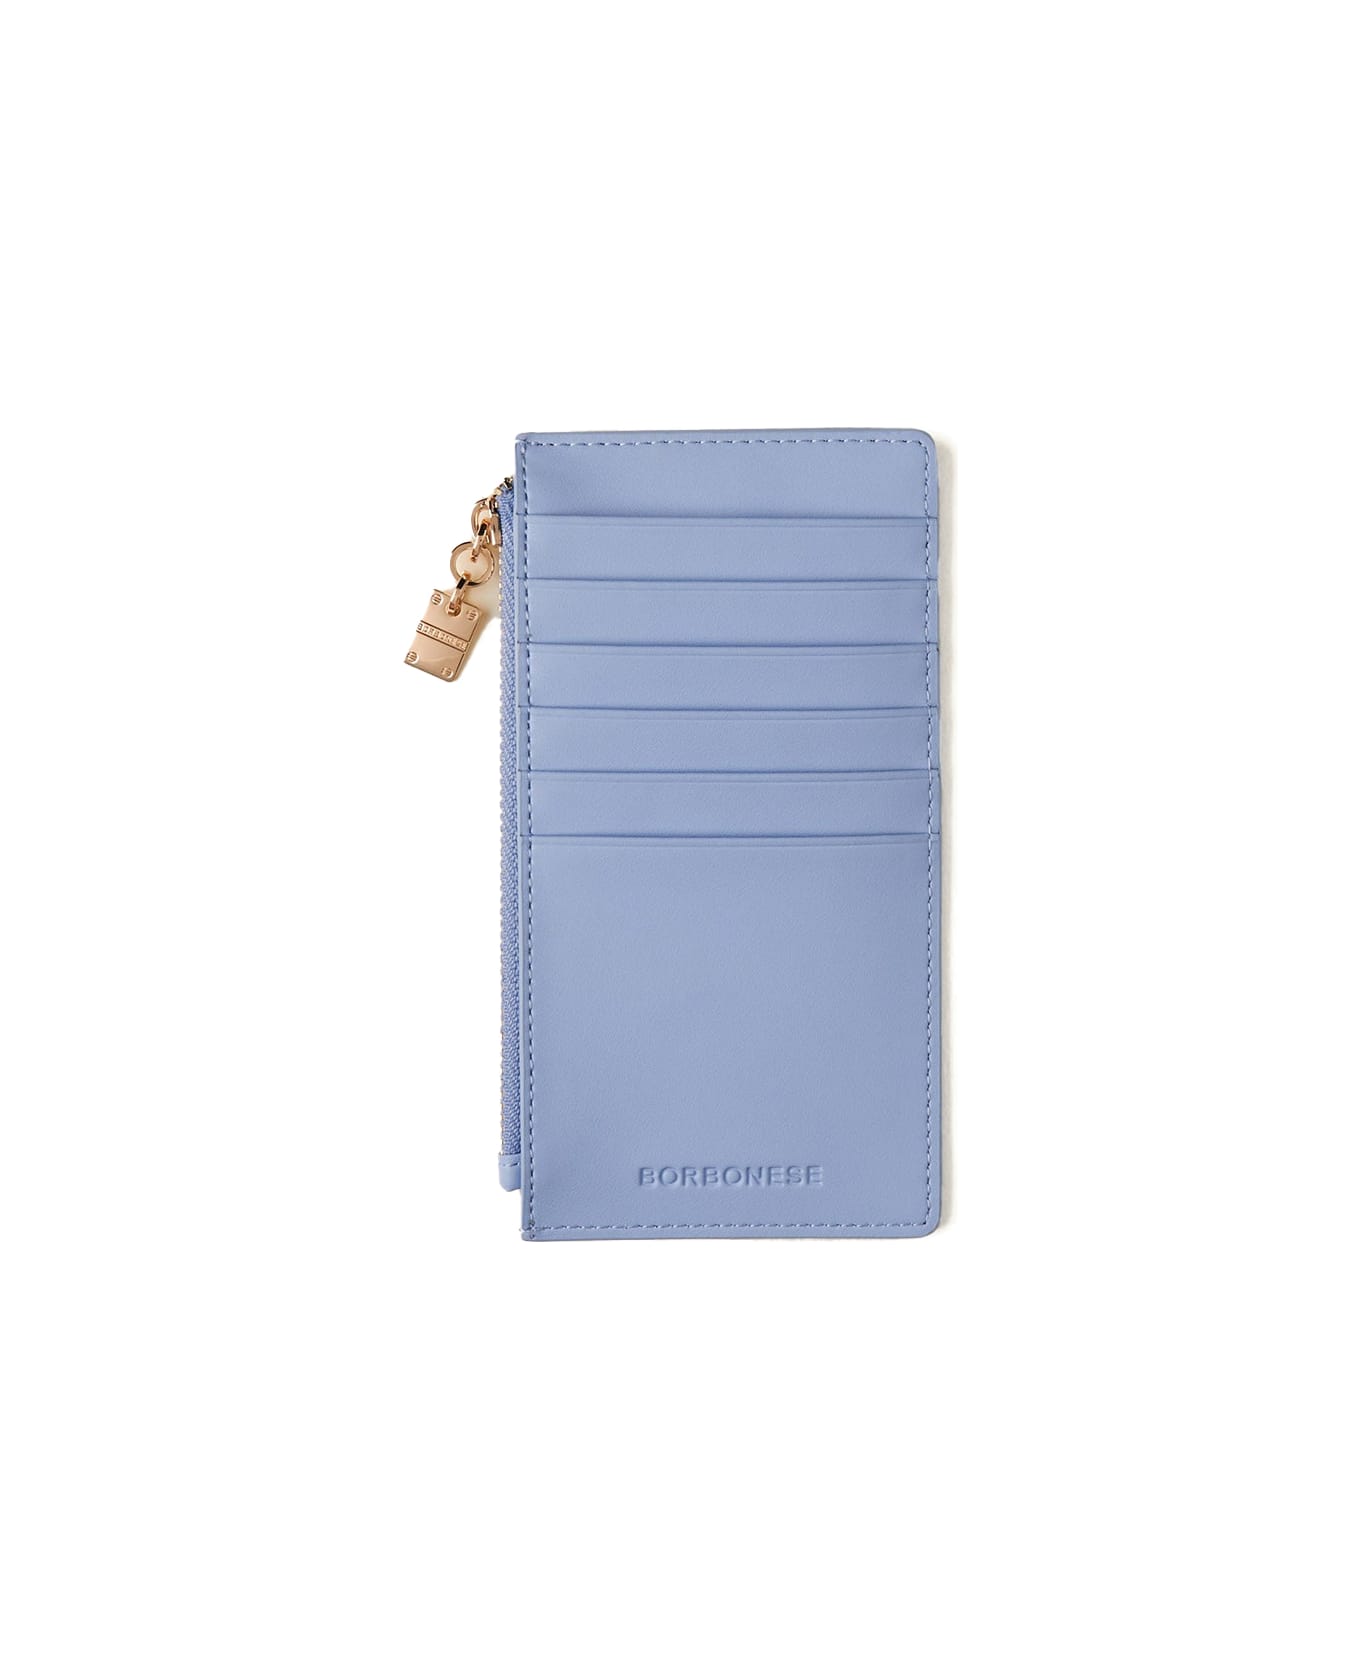 Borbonese Medium Light Blue Leather Card Holder - TOPAZIO